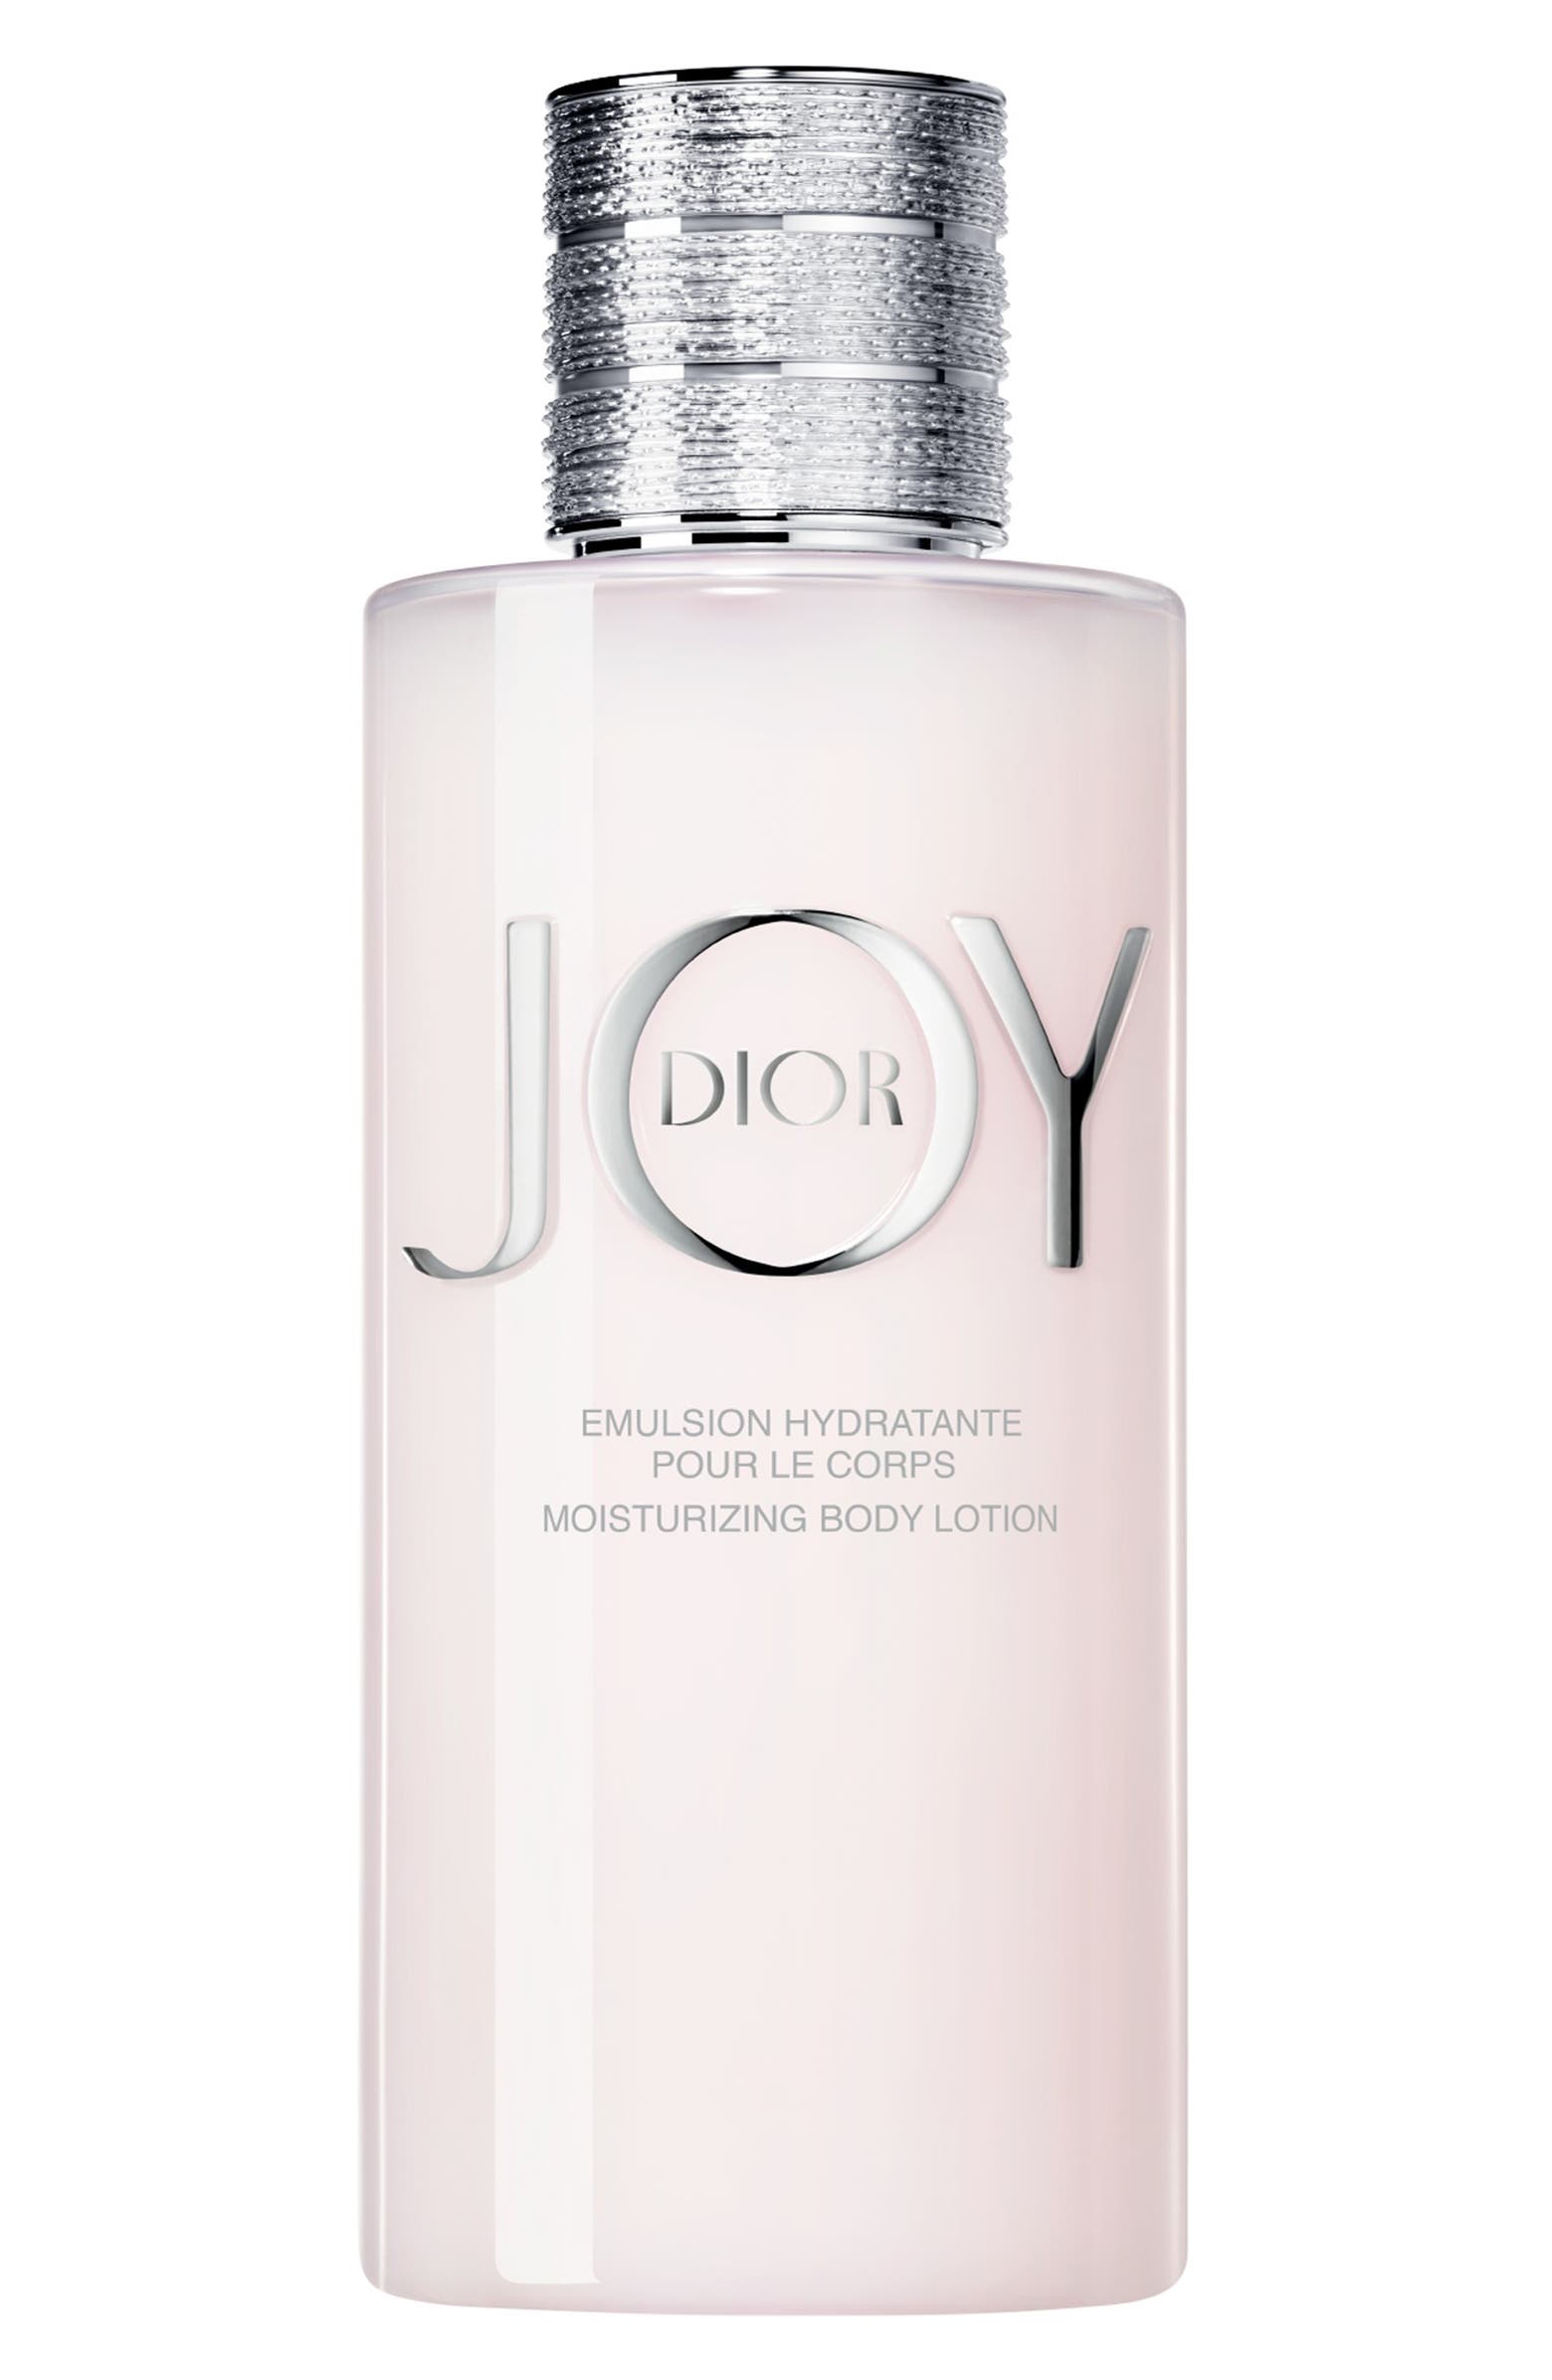 JOY by Dior Moisturizing Body Lotion Nordstrom